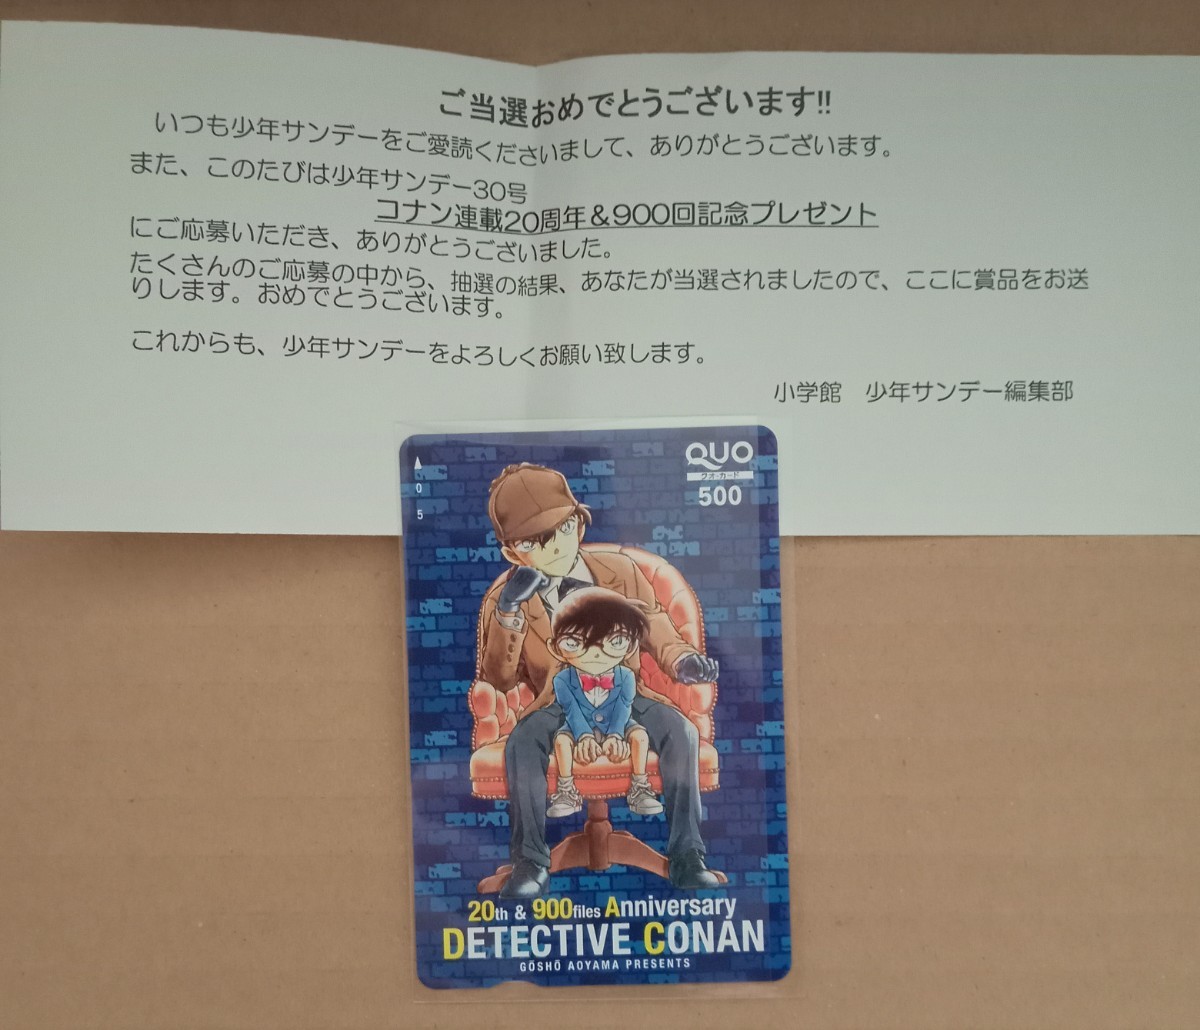  Detective Conan / QUO card / QUO/ ream .20 anniversary &900 times memory present / Shonen Sunday / present selection /. pre / present selection notification paper 